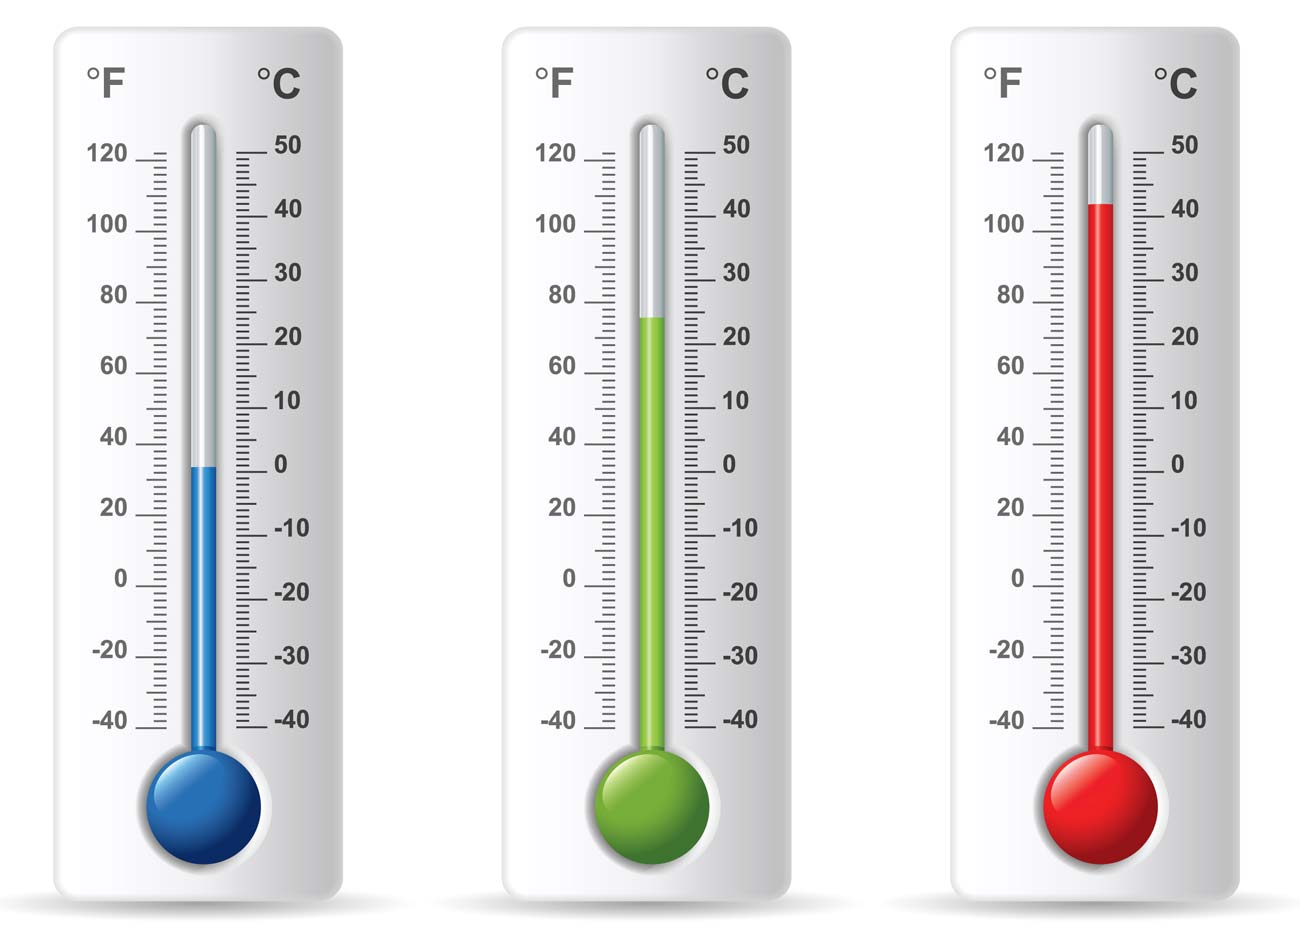 temperature conversion from fahrenheit to celsius formula